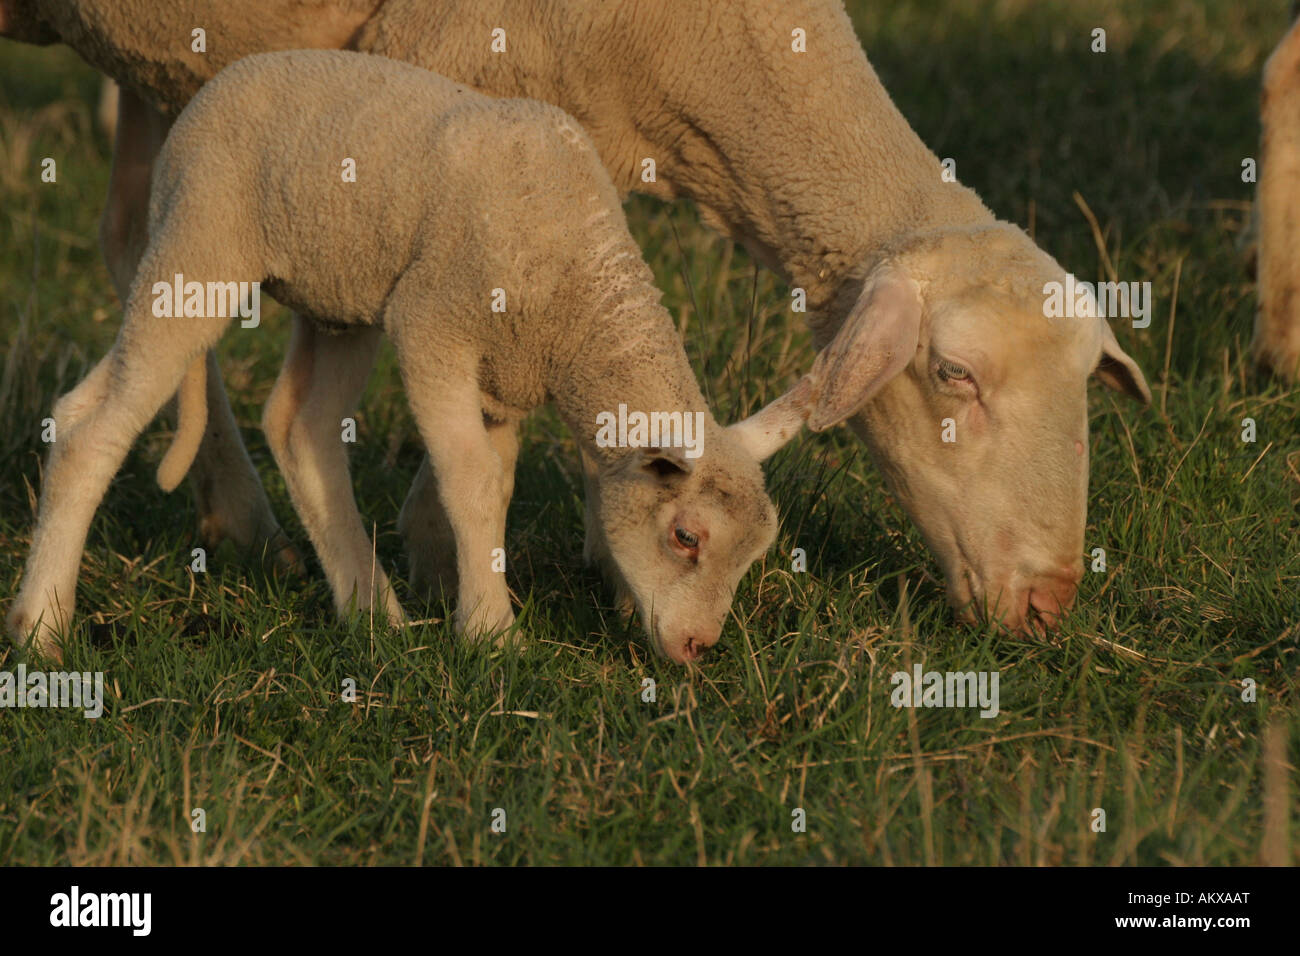 Young sheep with ewe, grazing Stock Photo